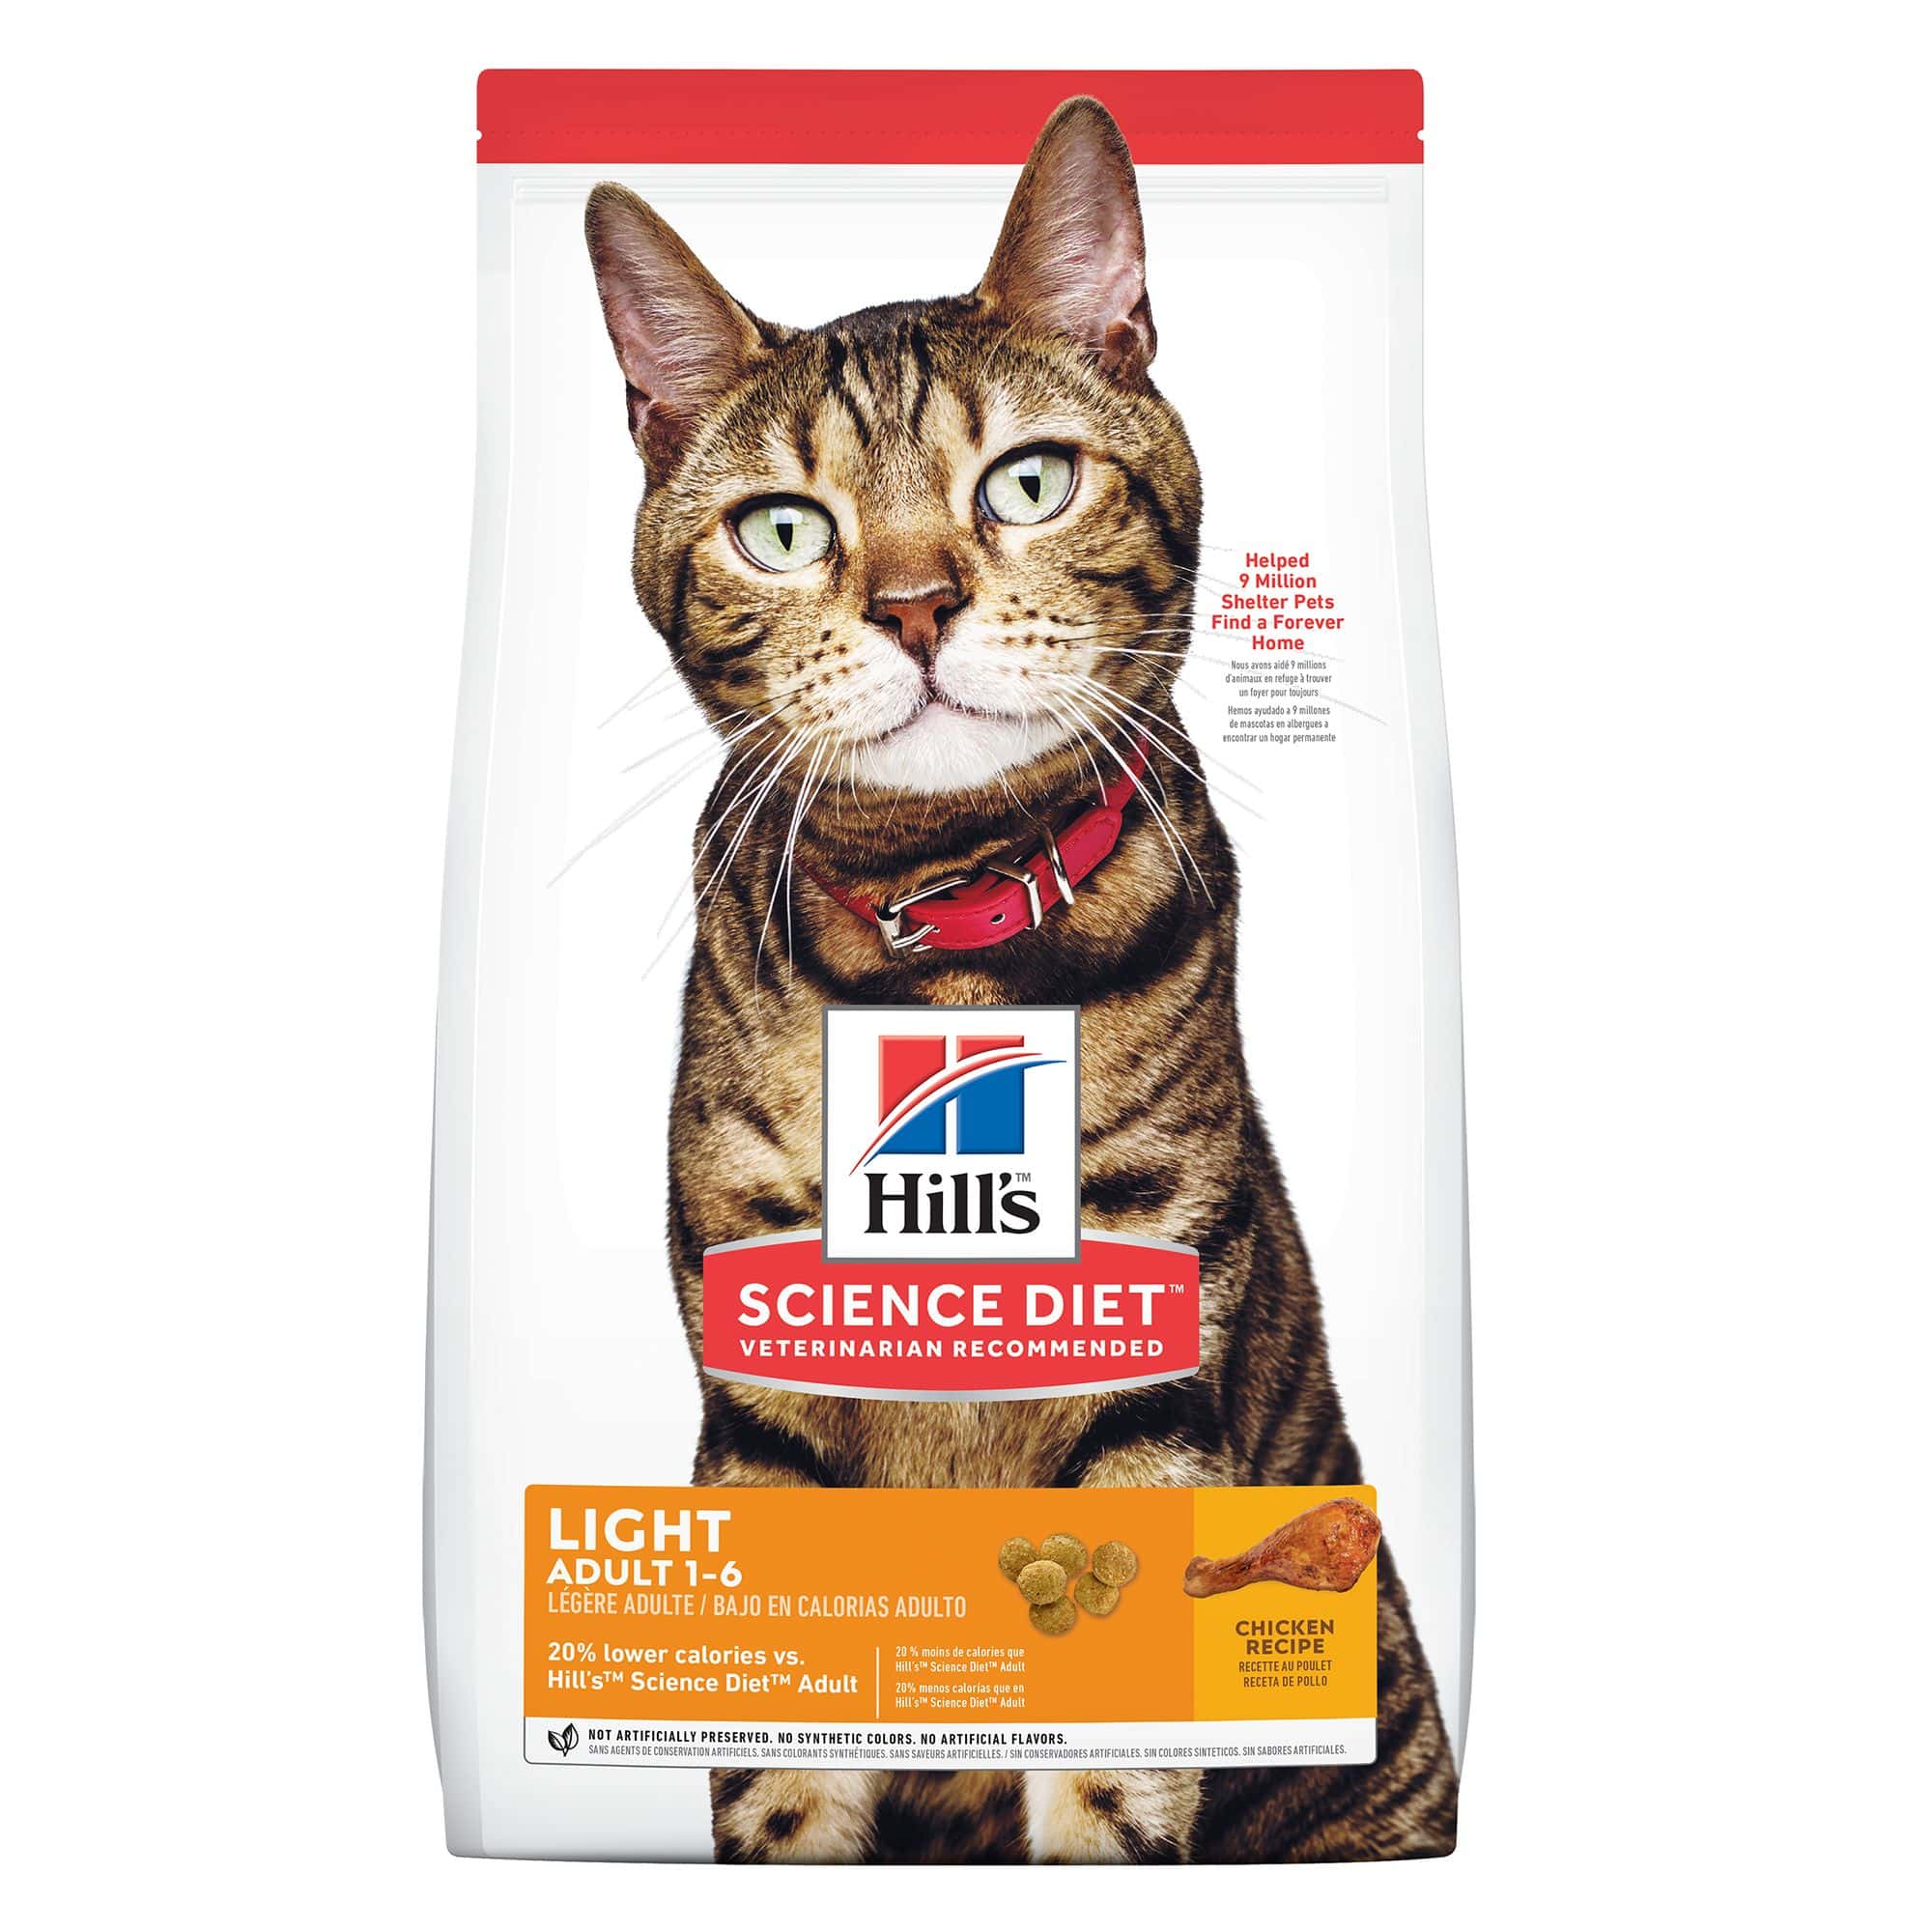 Purina Light Cat Food Feeding Guide